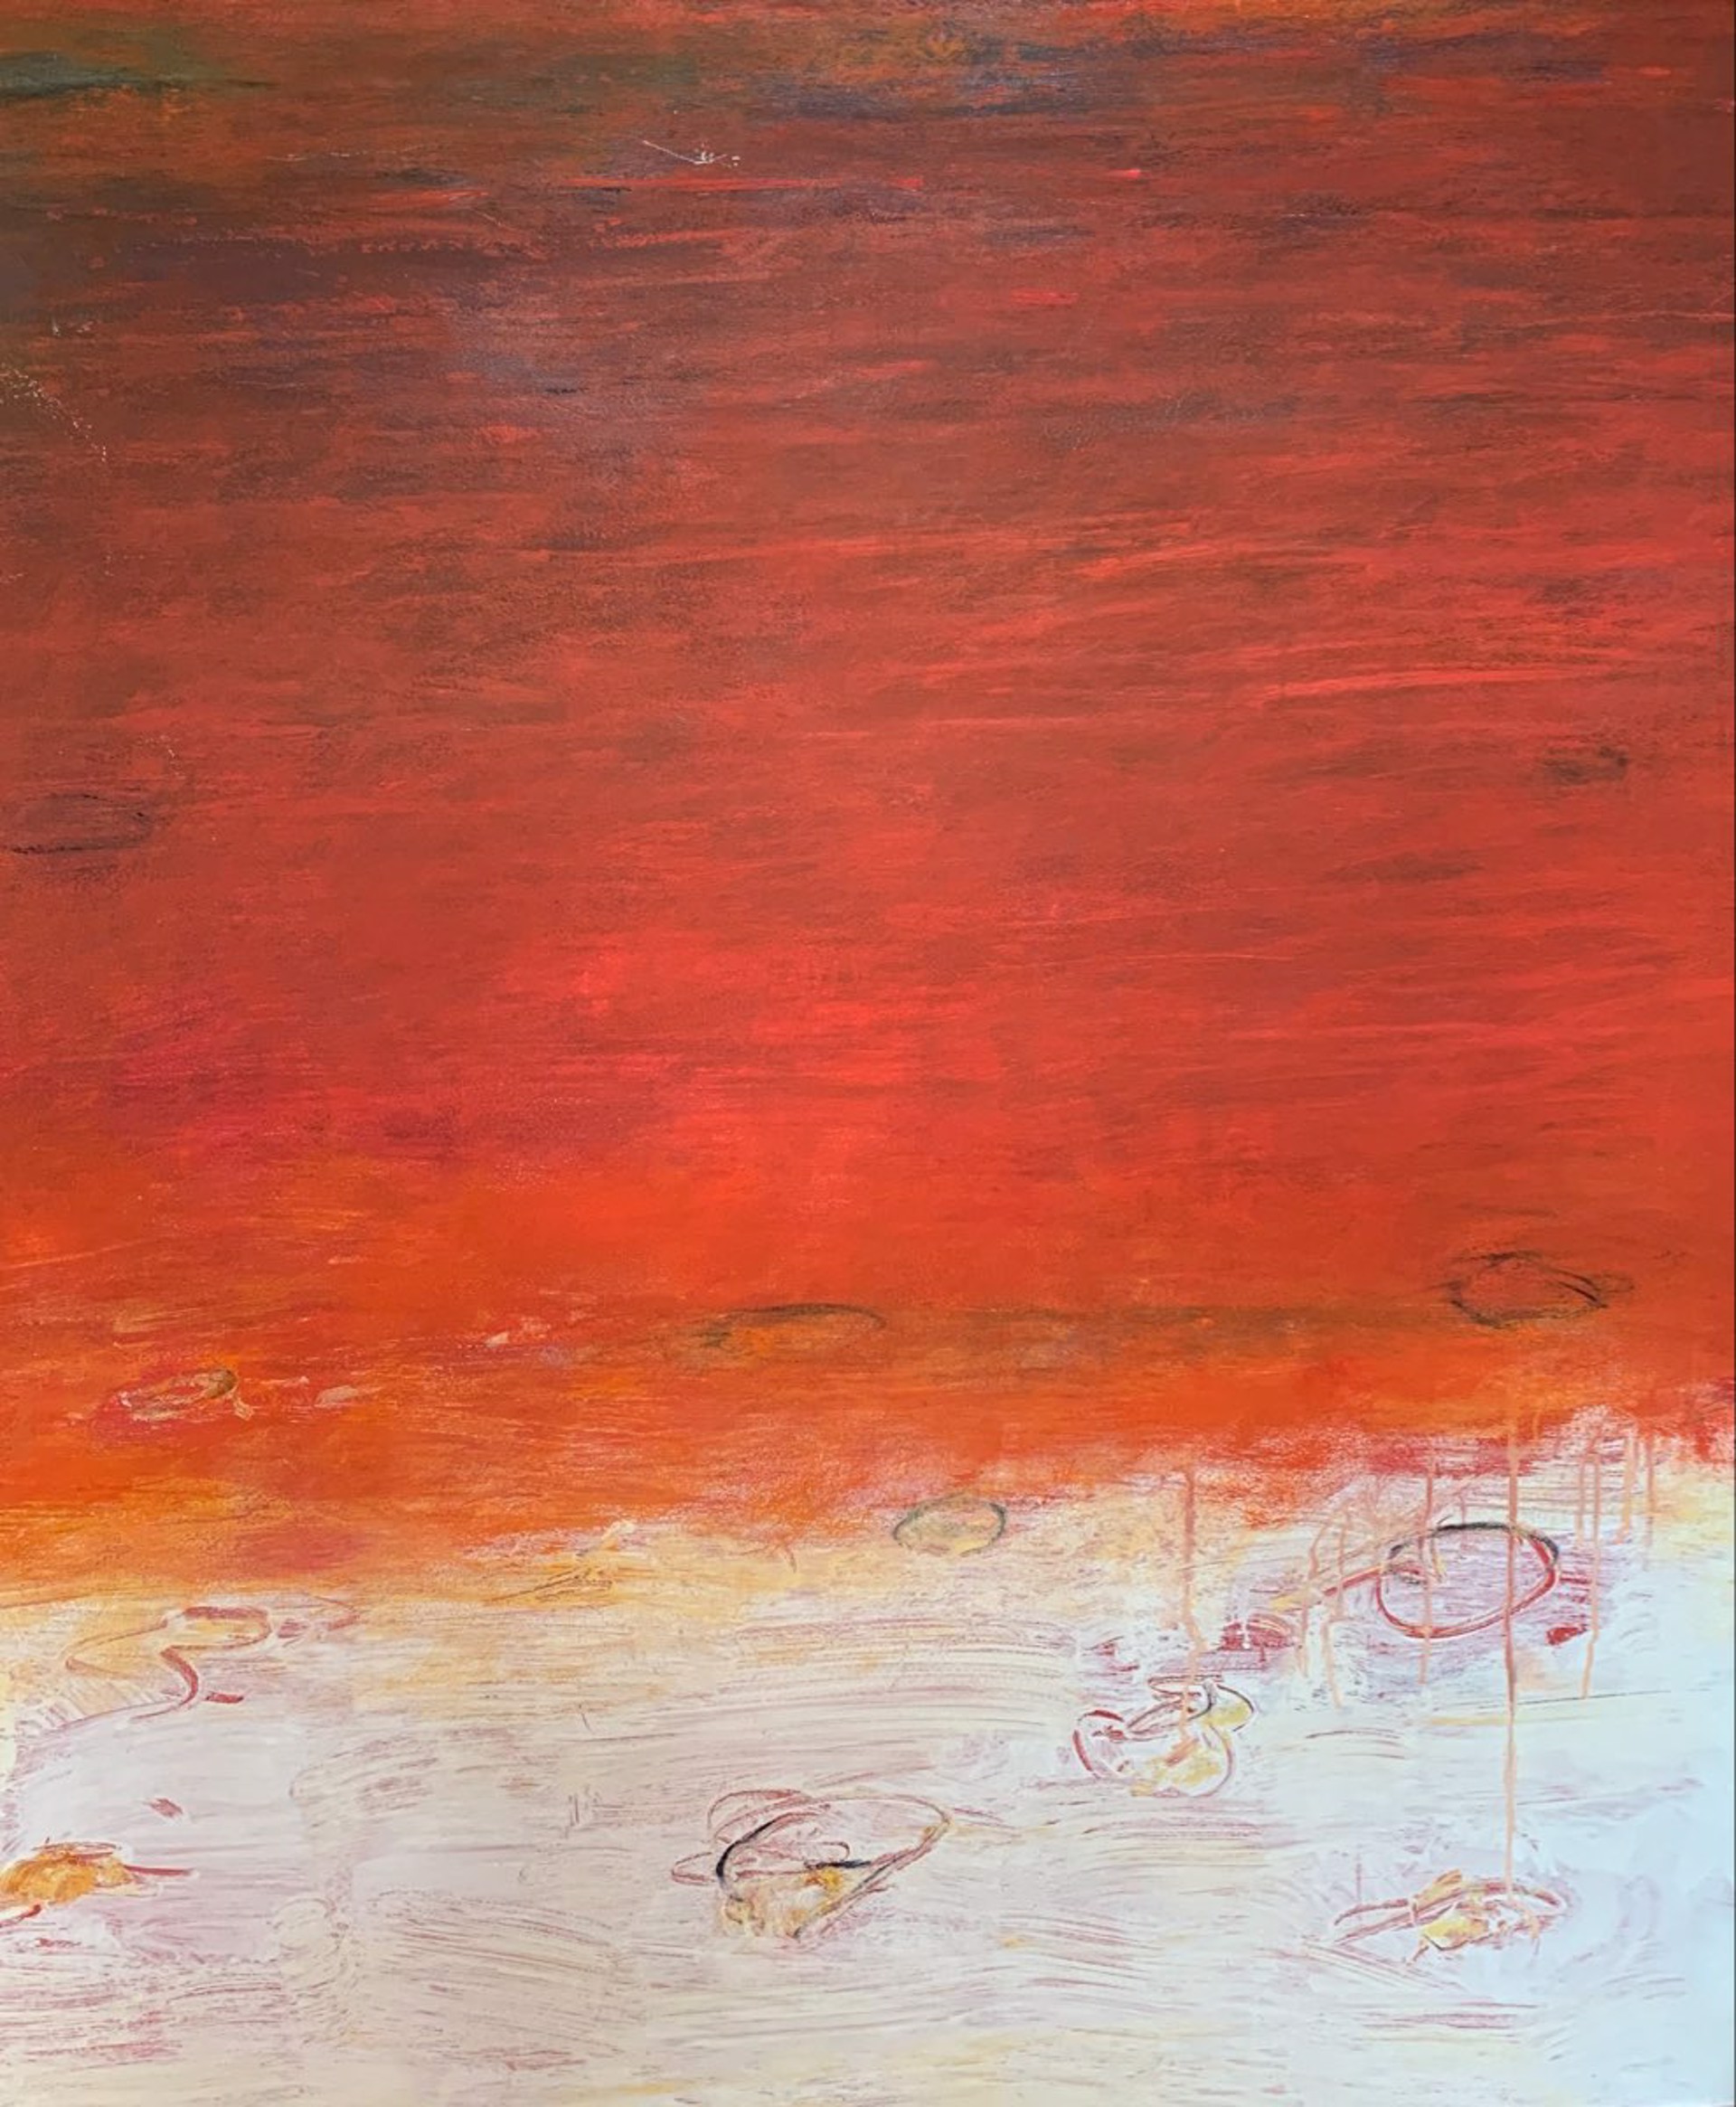 The Red Shore by Tony Magar